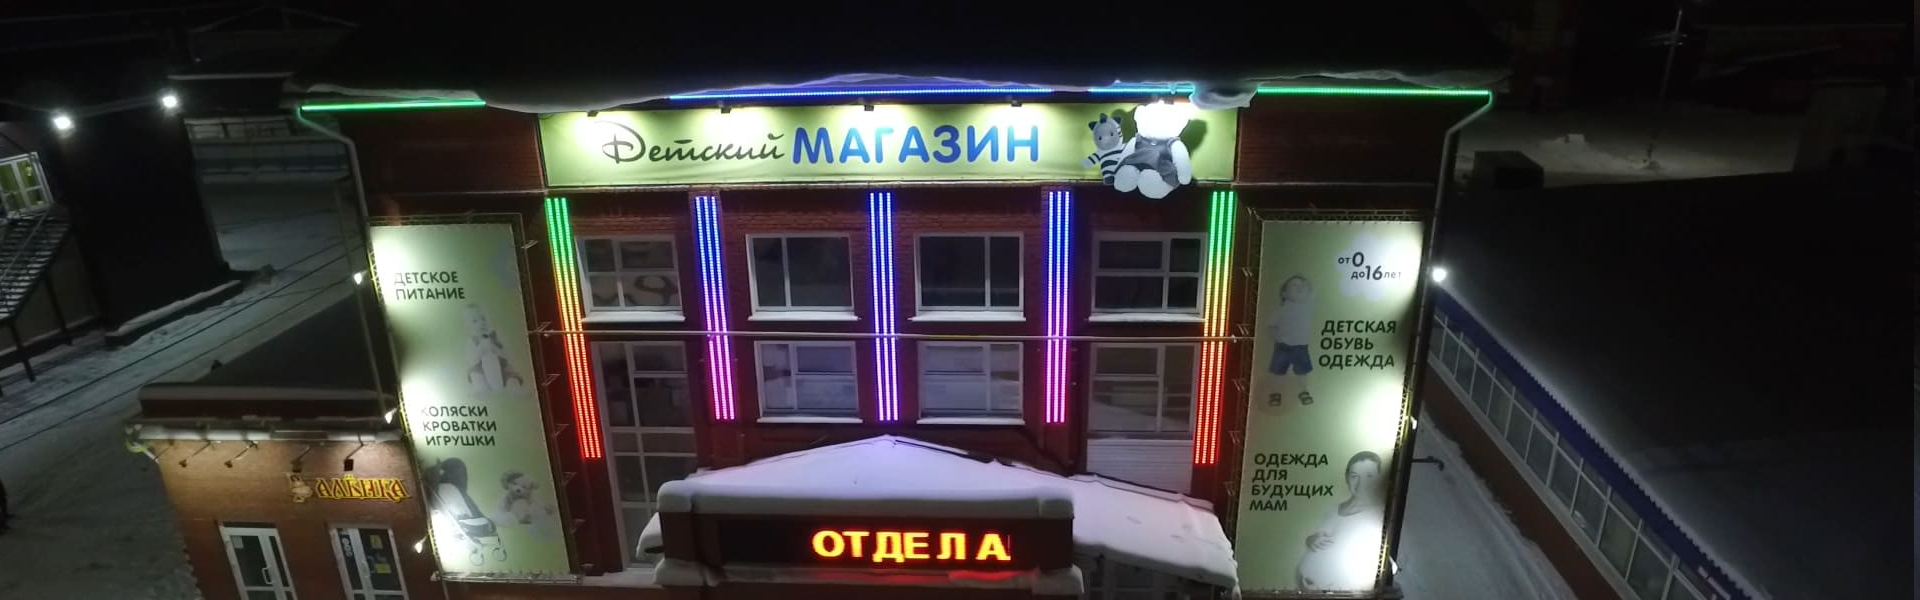 Медиафасад ТЦ «Детский магазин» в Пензе